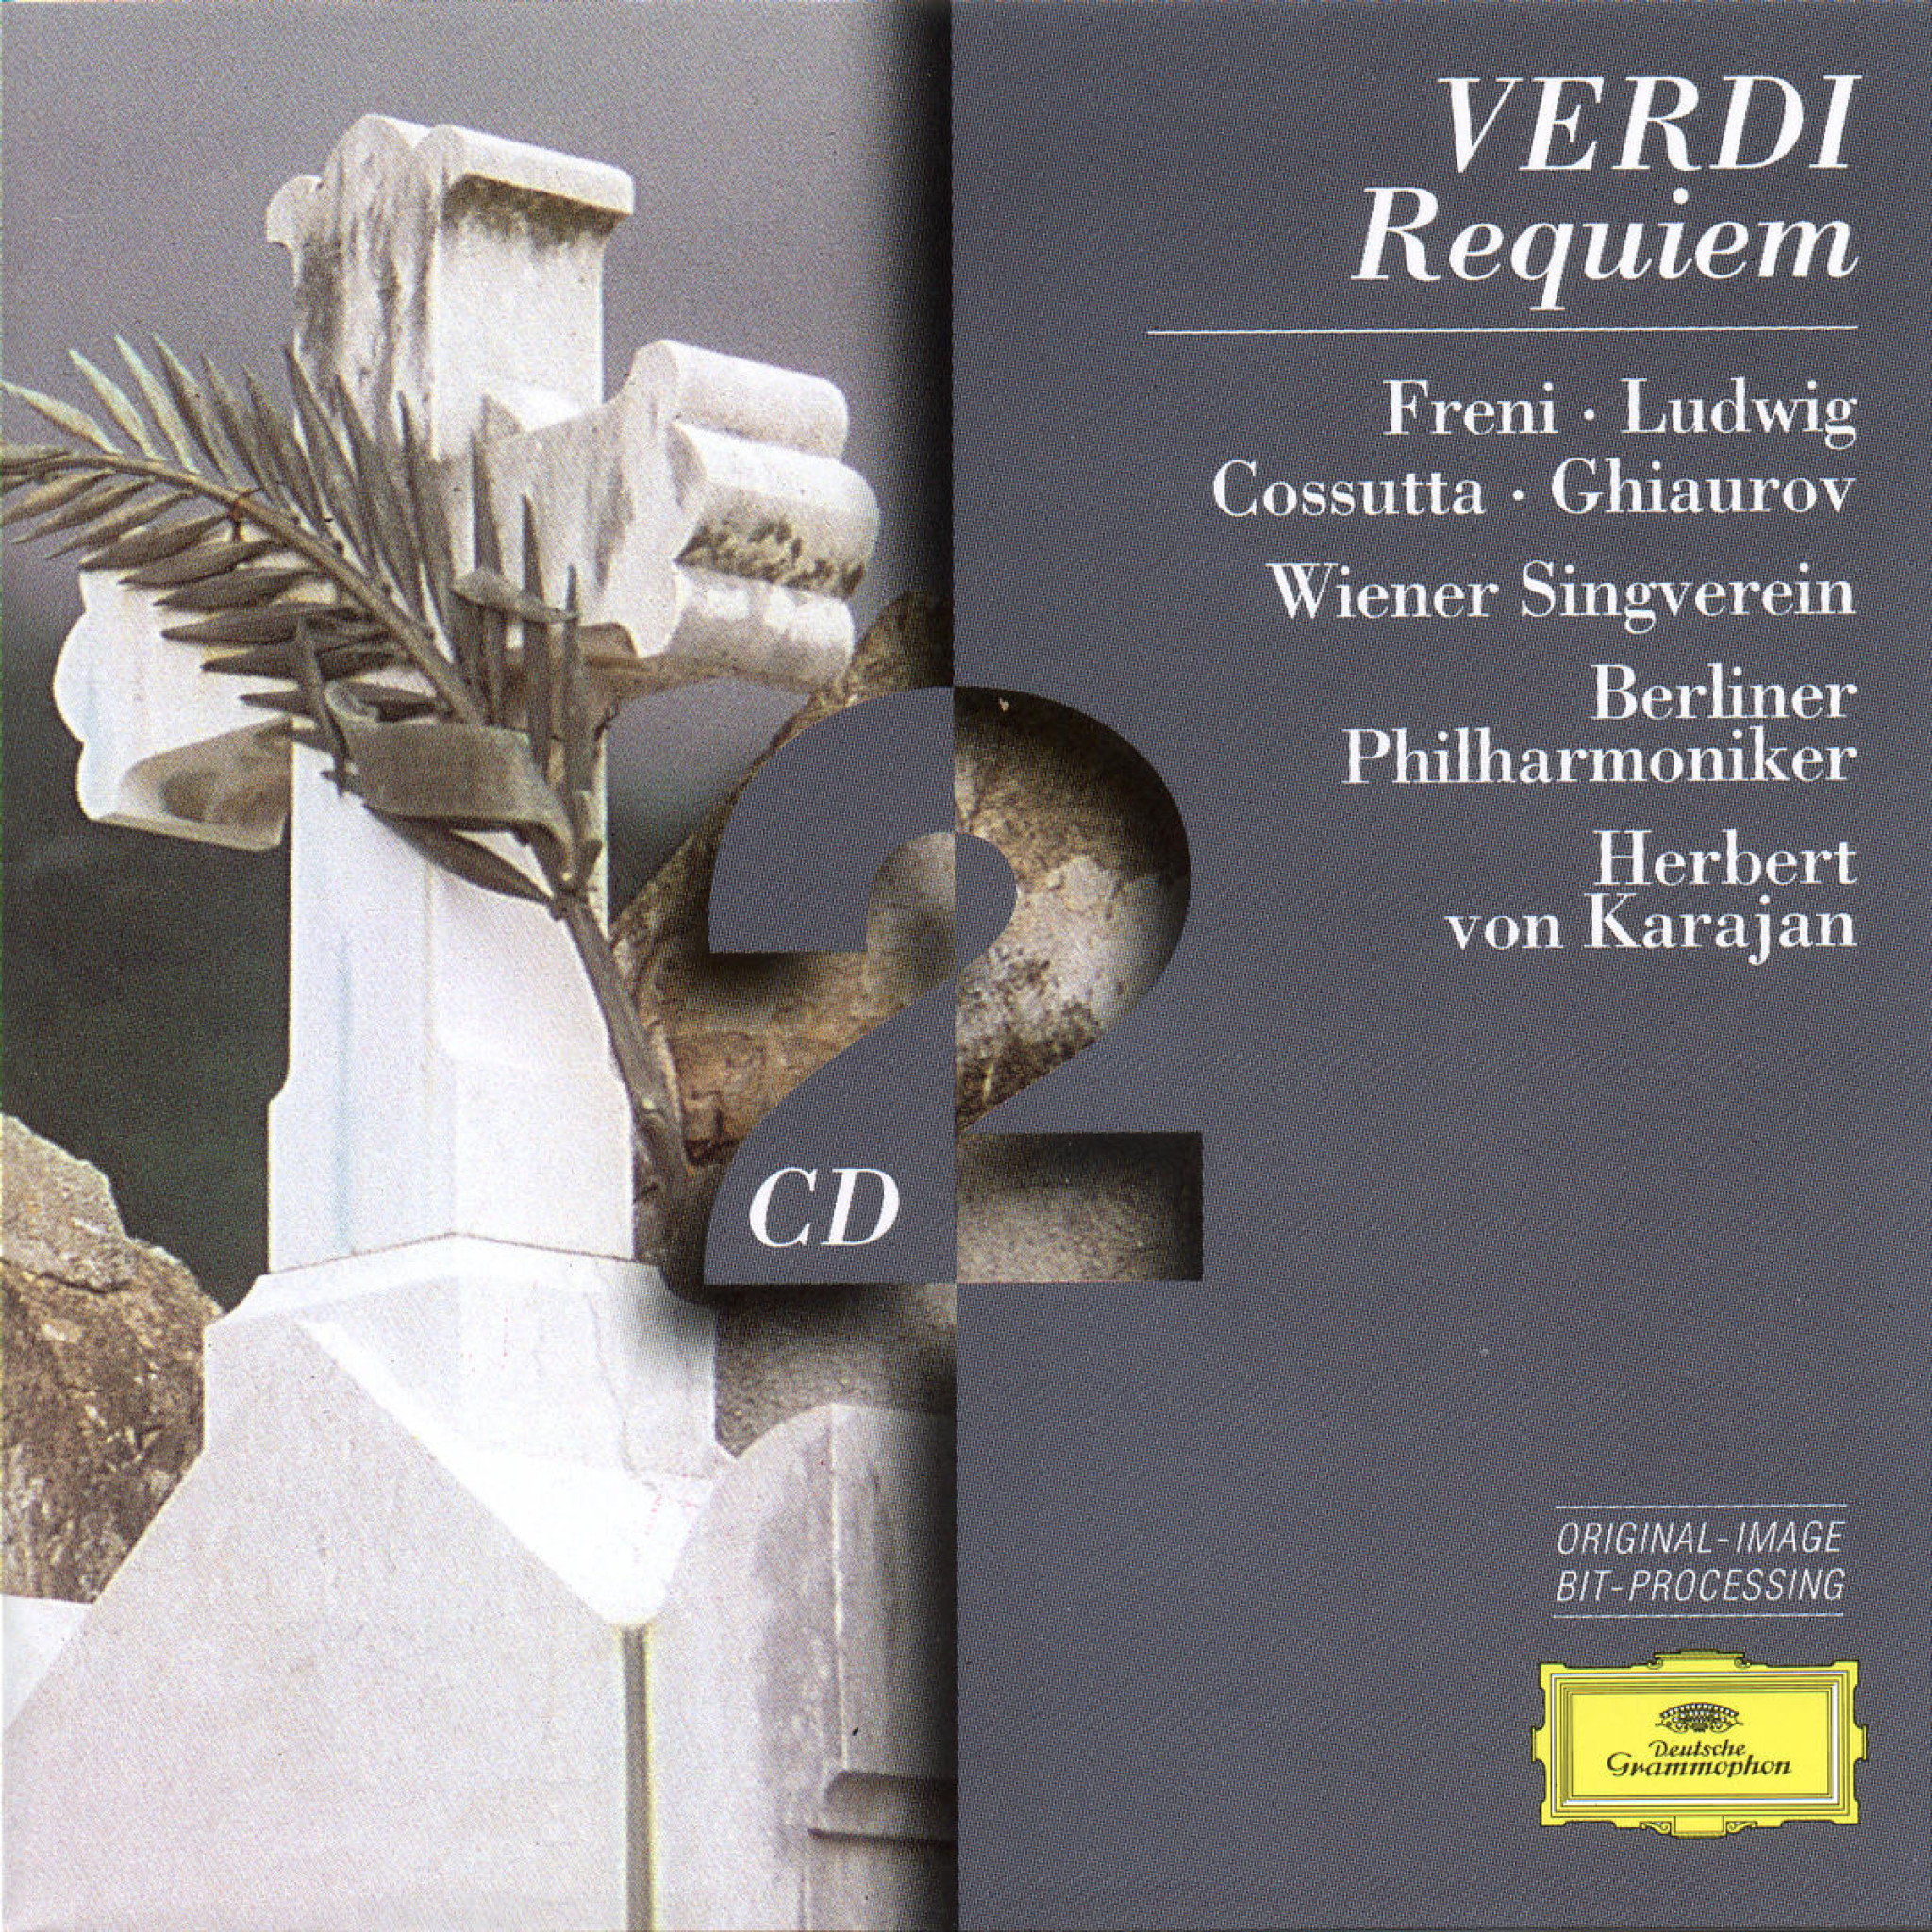 VERDI Requiem, BRUCKNER Te Deum / Karajan